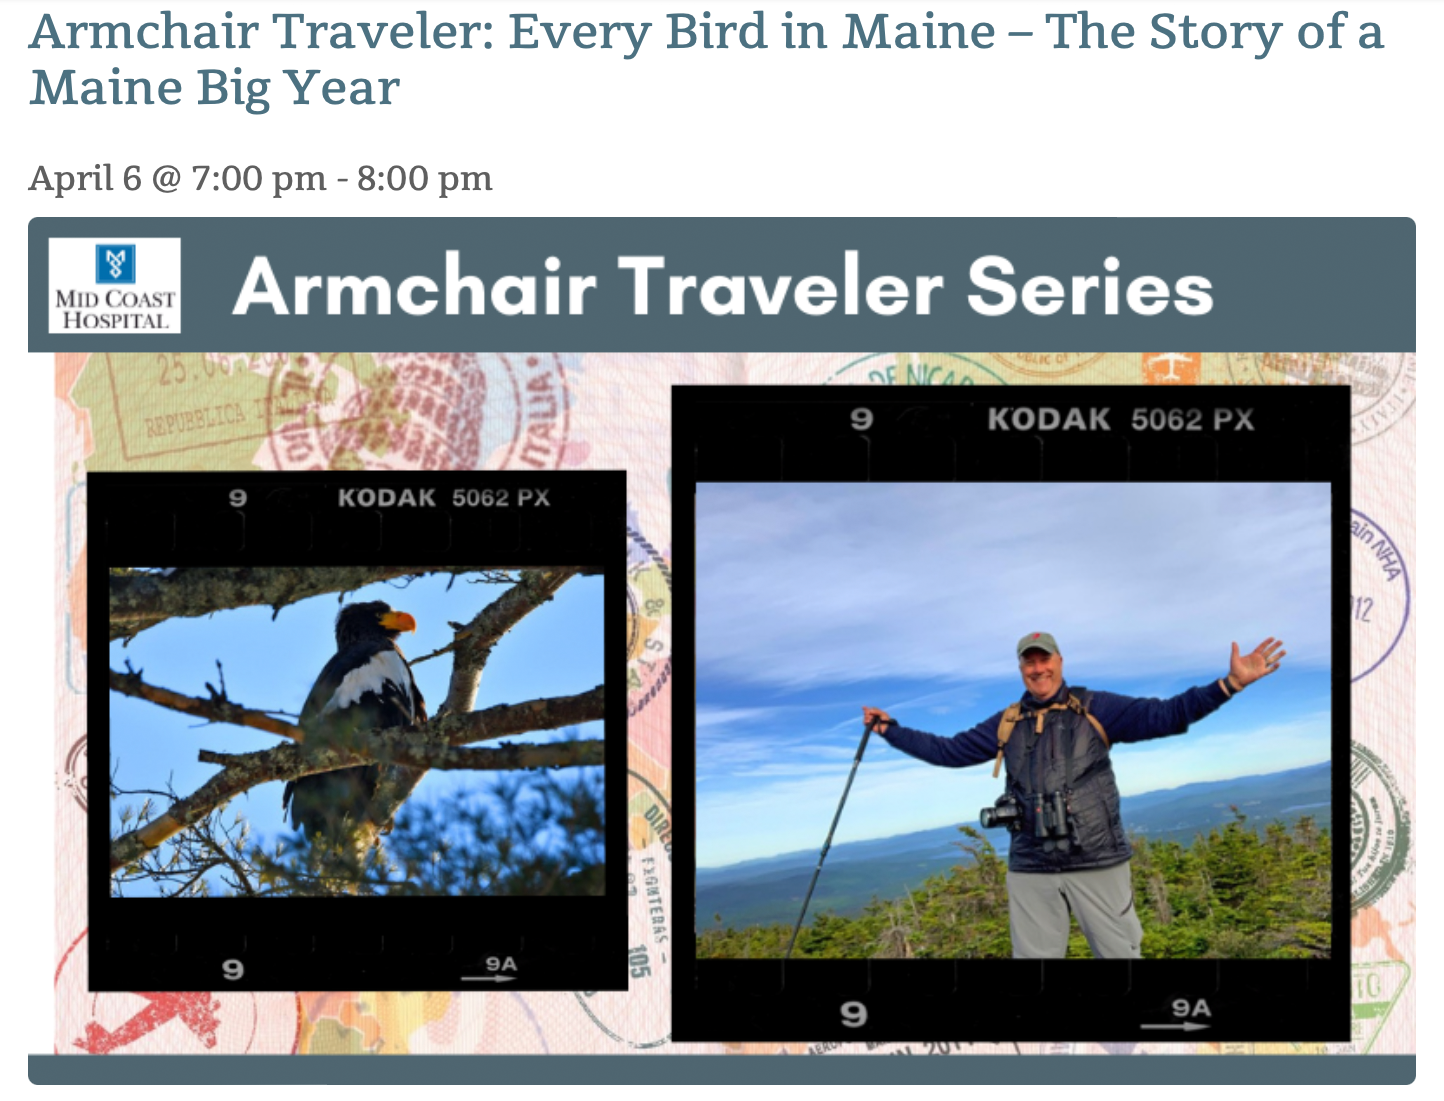 Every Bird in Maine